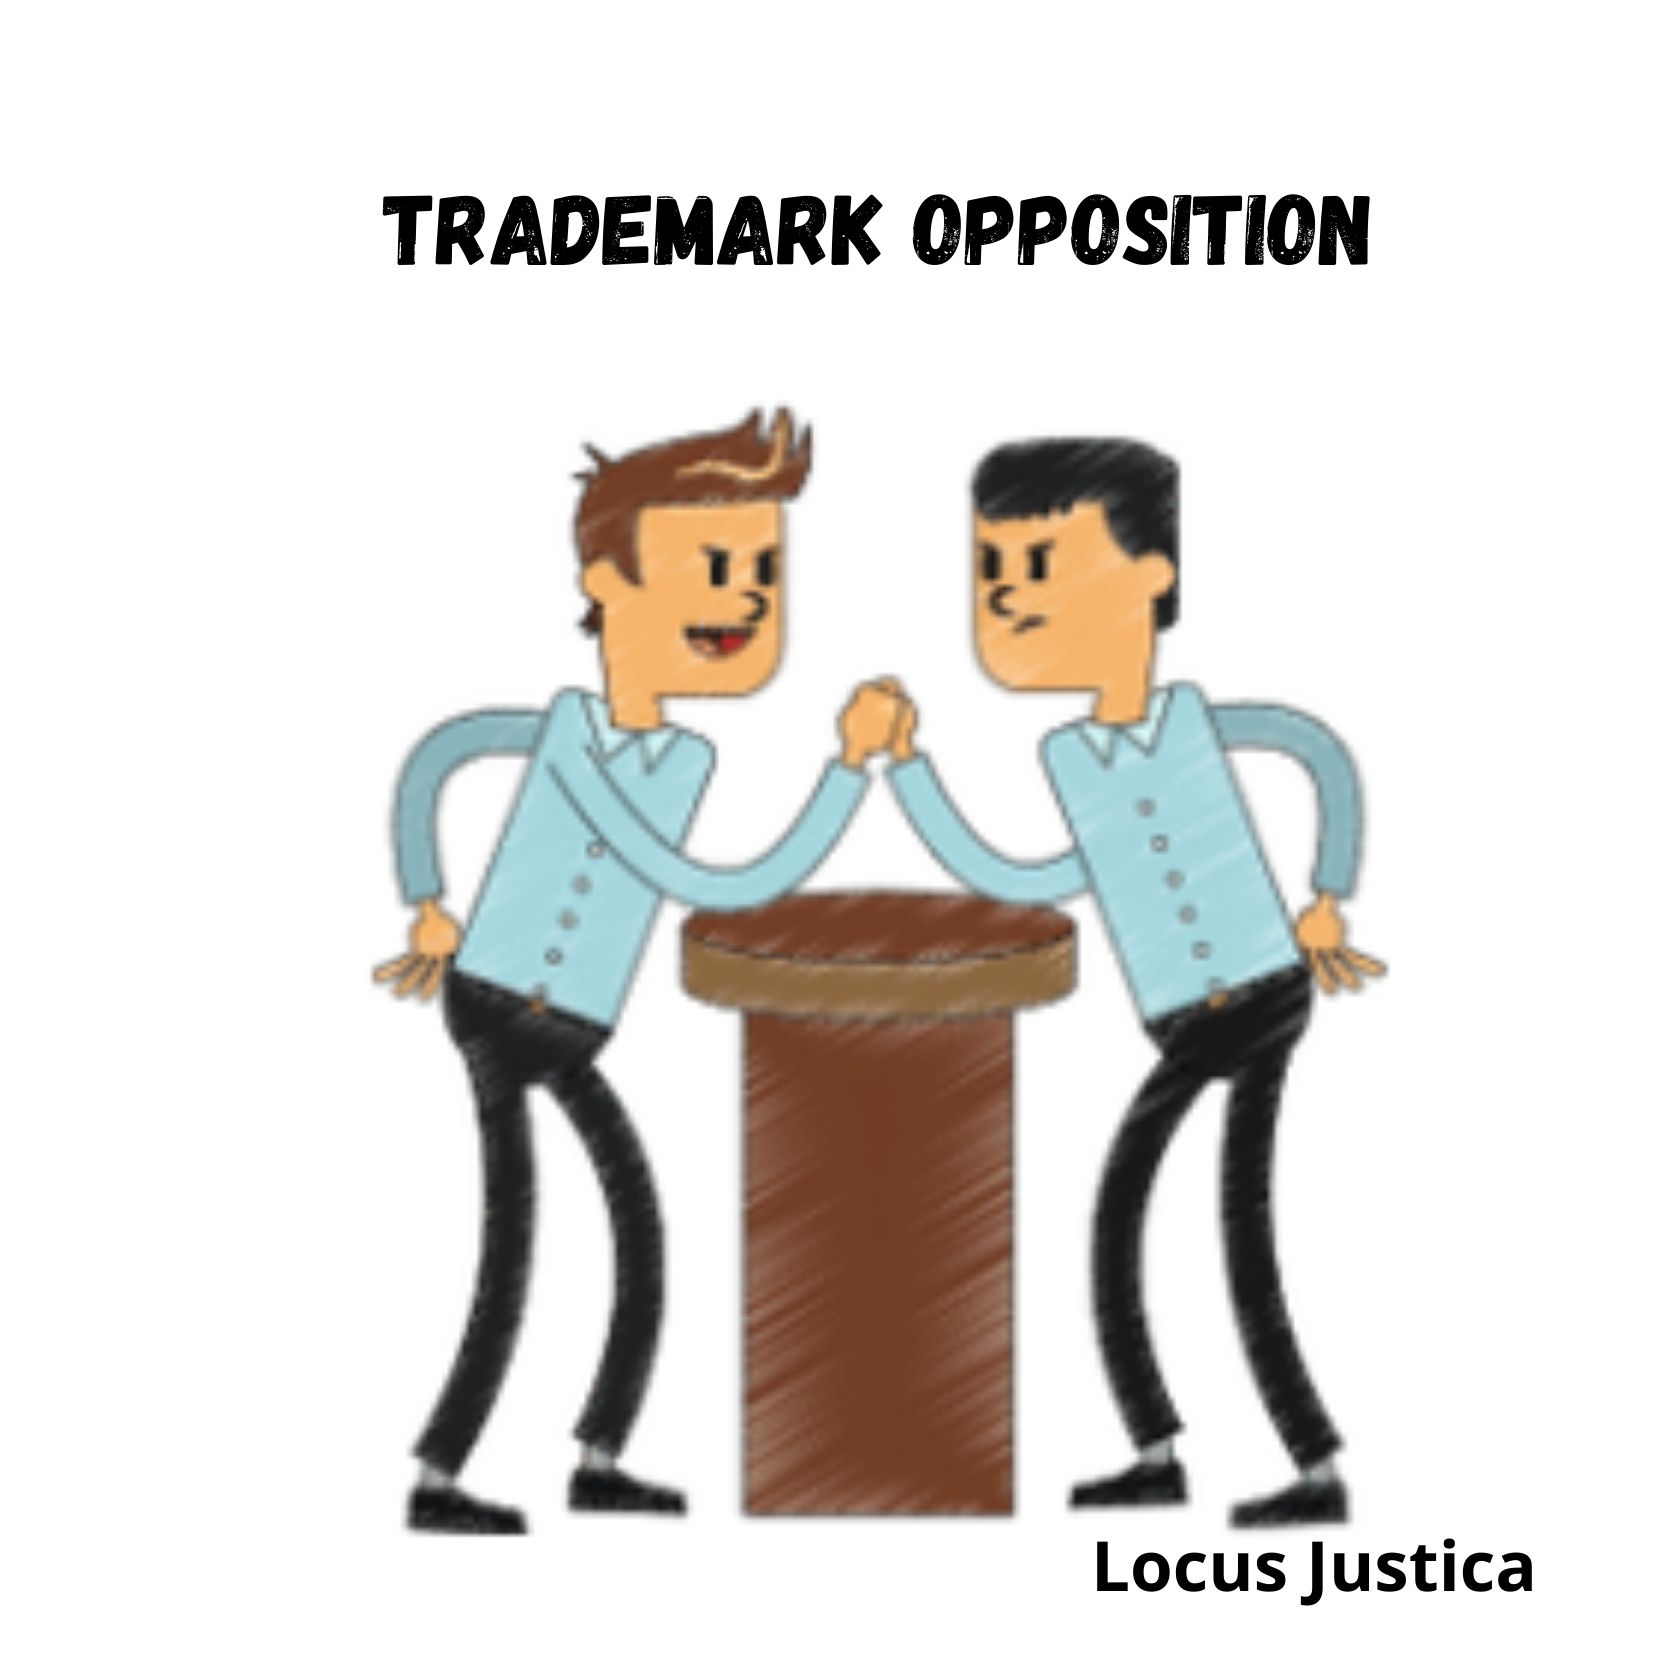 Trademark Opposition tricks